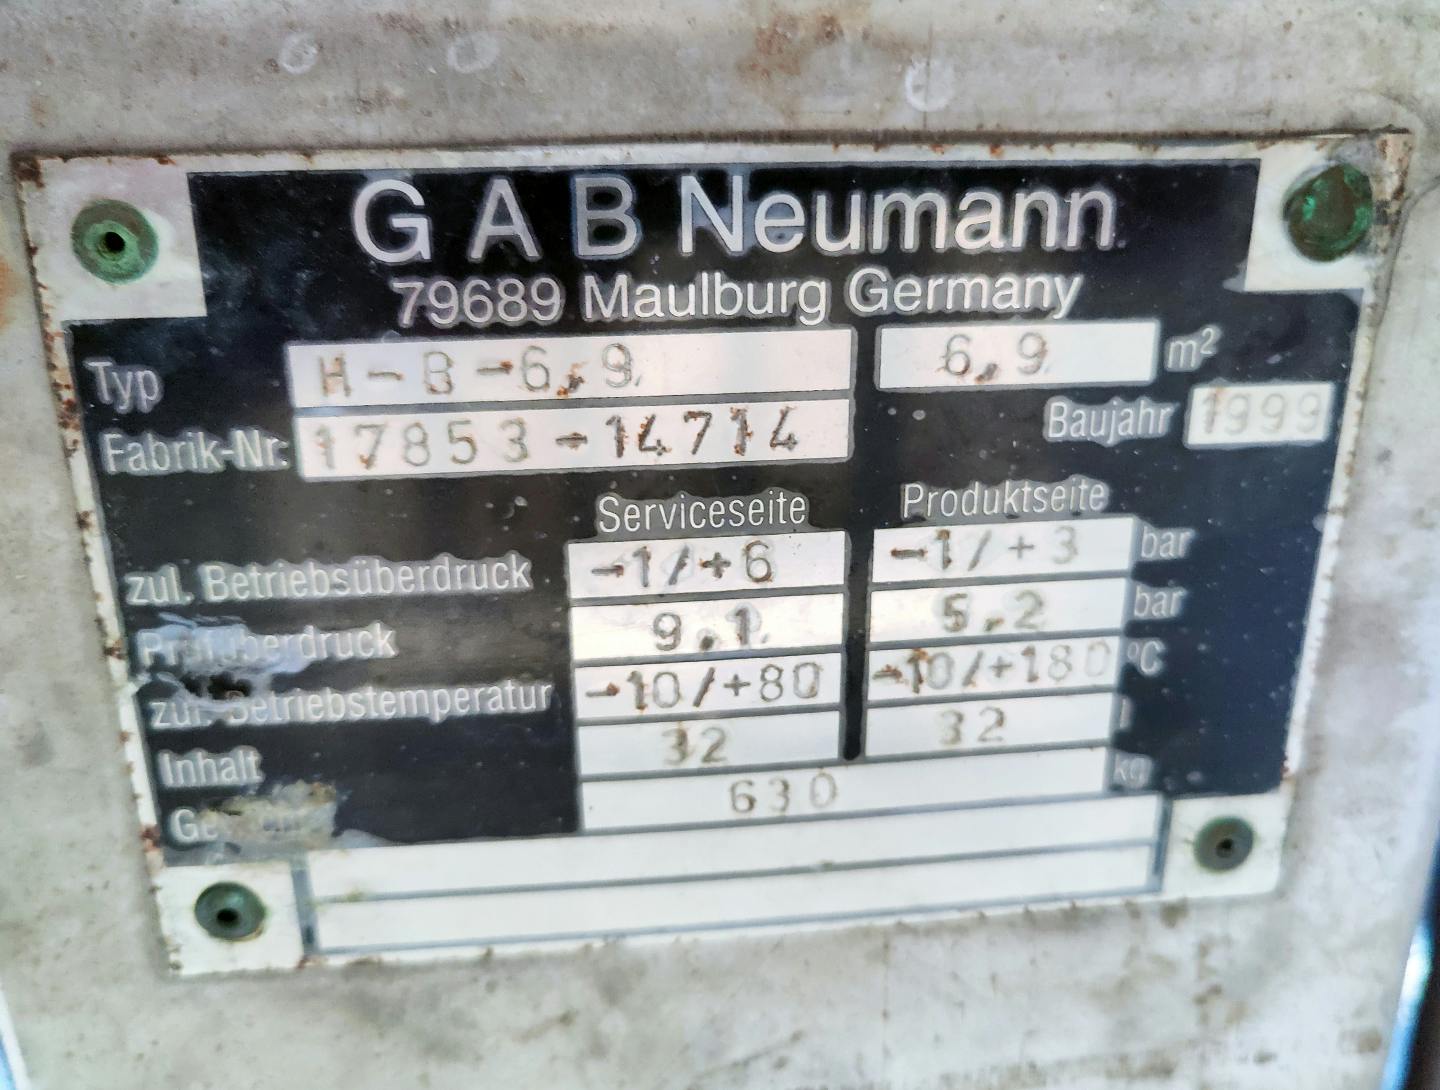 Gab Neumann H-B- 6,9 - Shell and tube heat exchanger - image 7